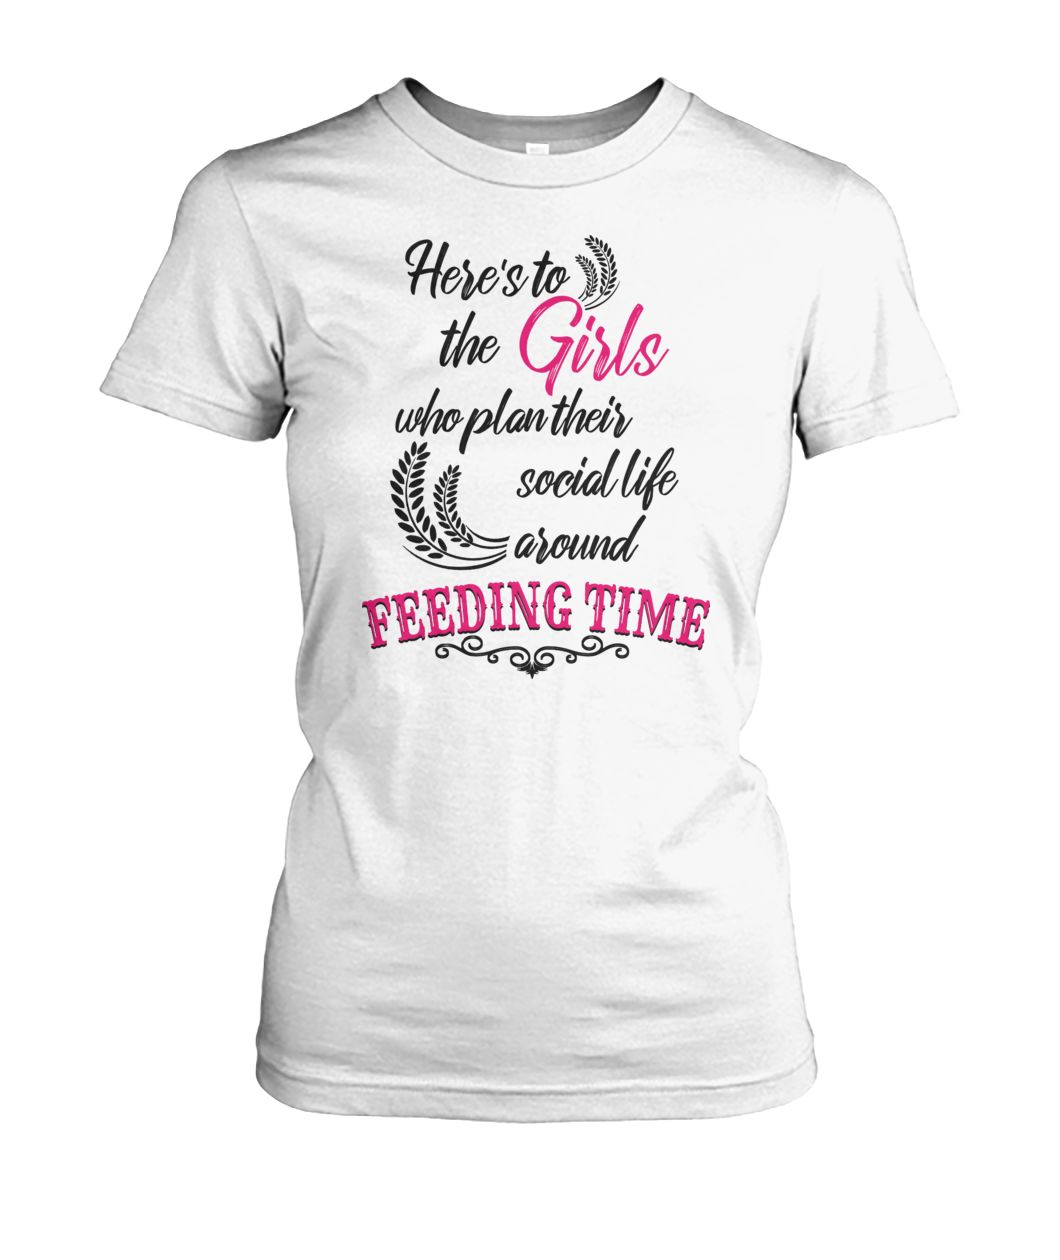 Here's to the girls who plan their social life around feeding time farmer women's crew tee